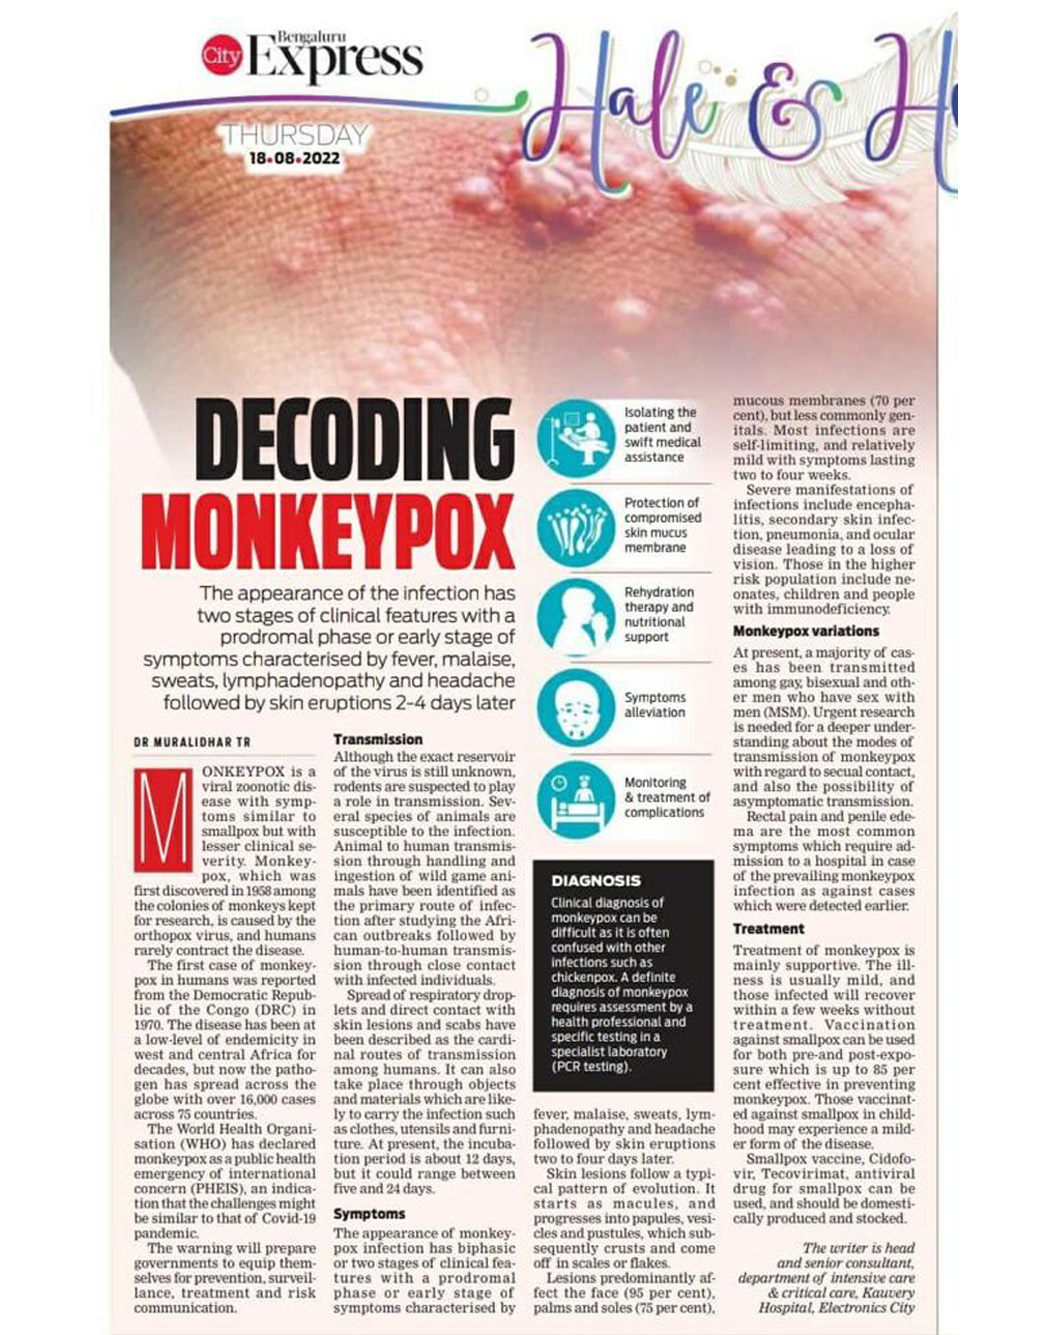 Decoding Monkey Pox